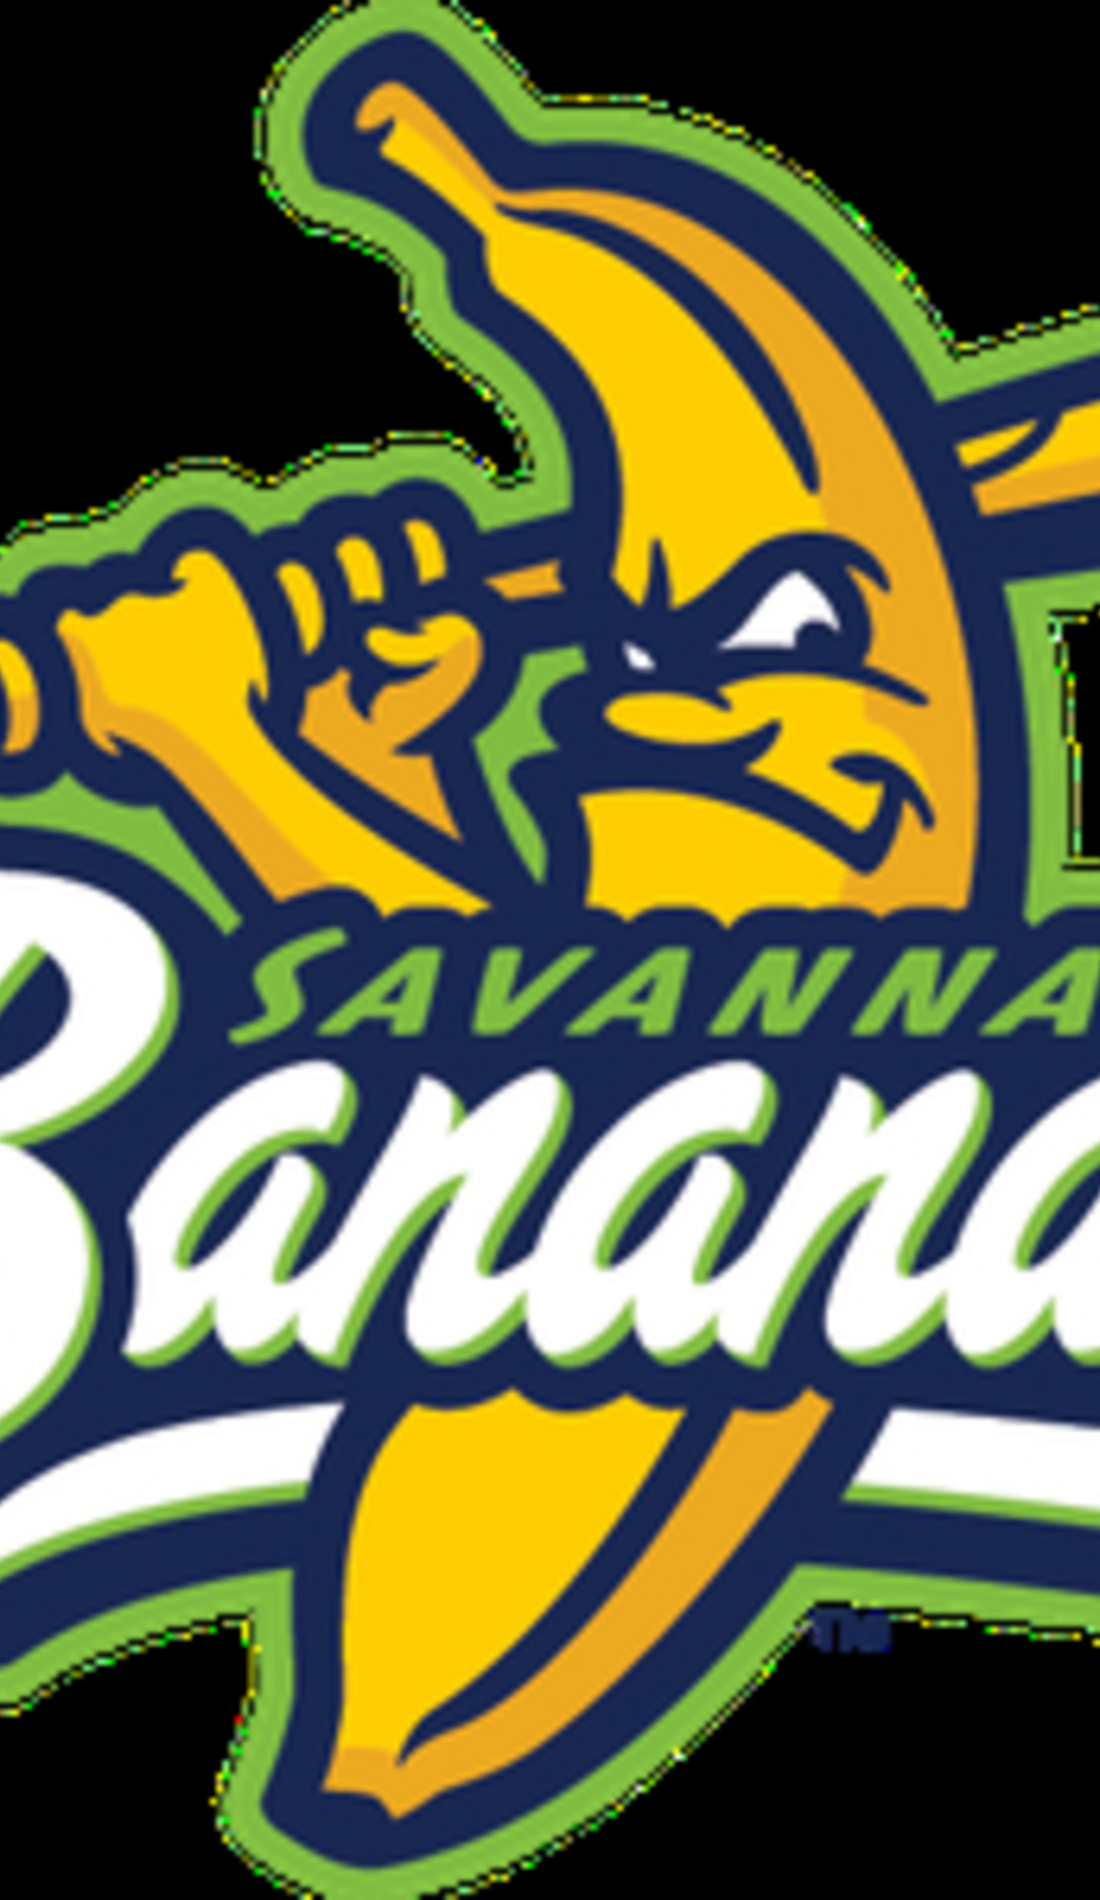 A Savannah Bananas live event